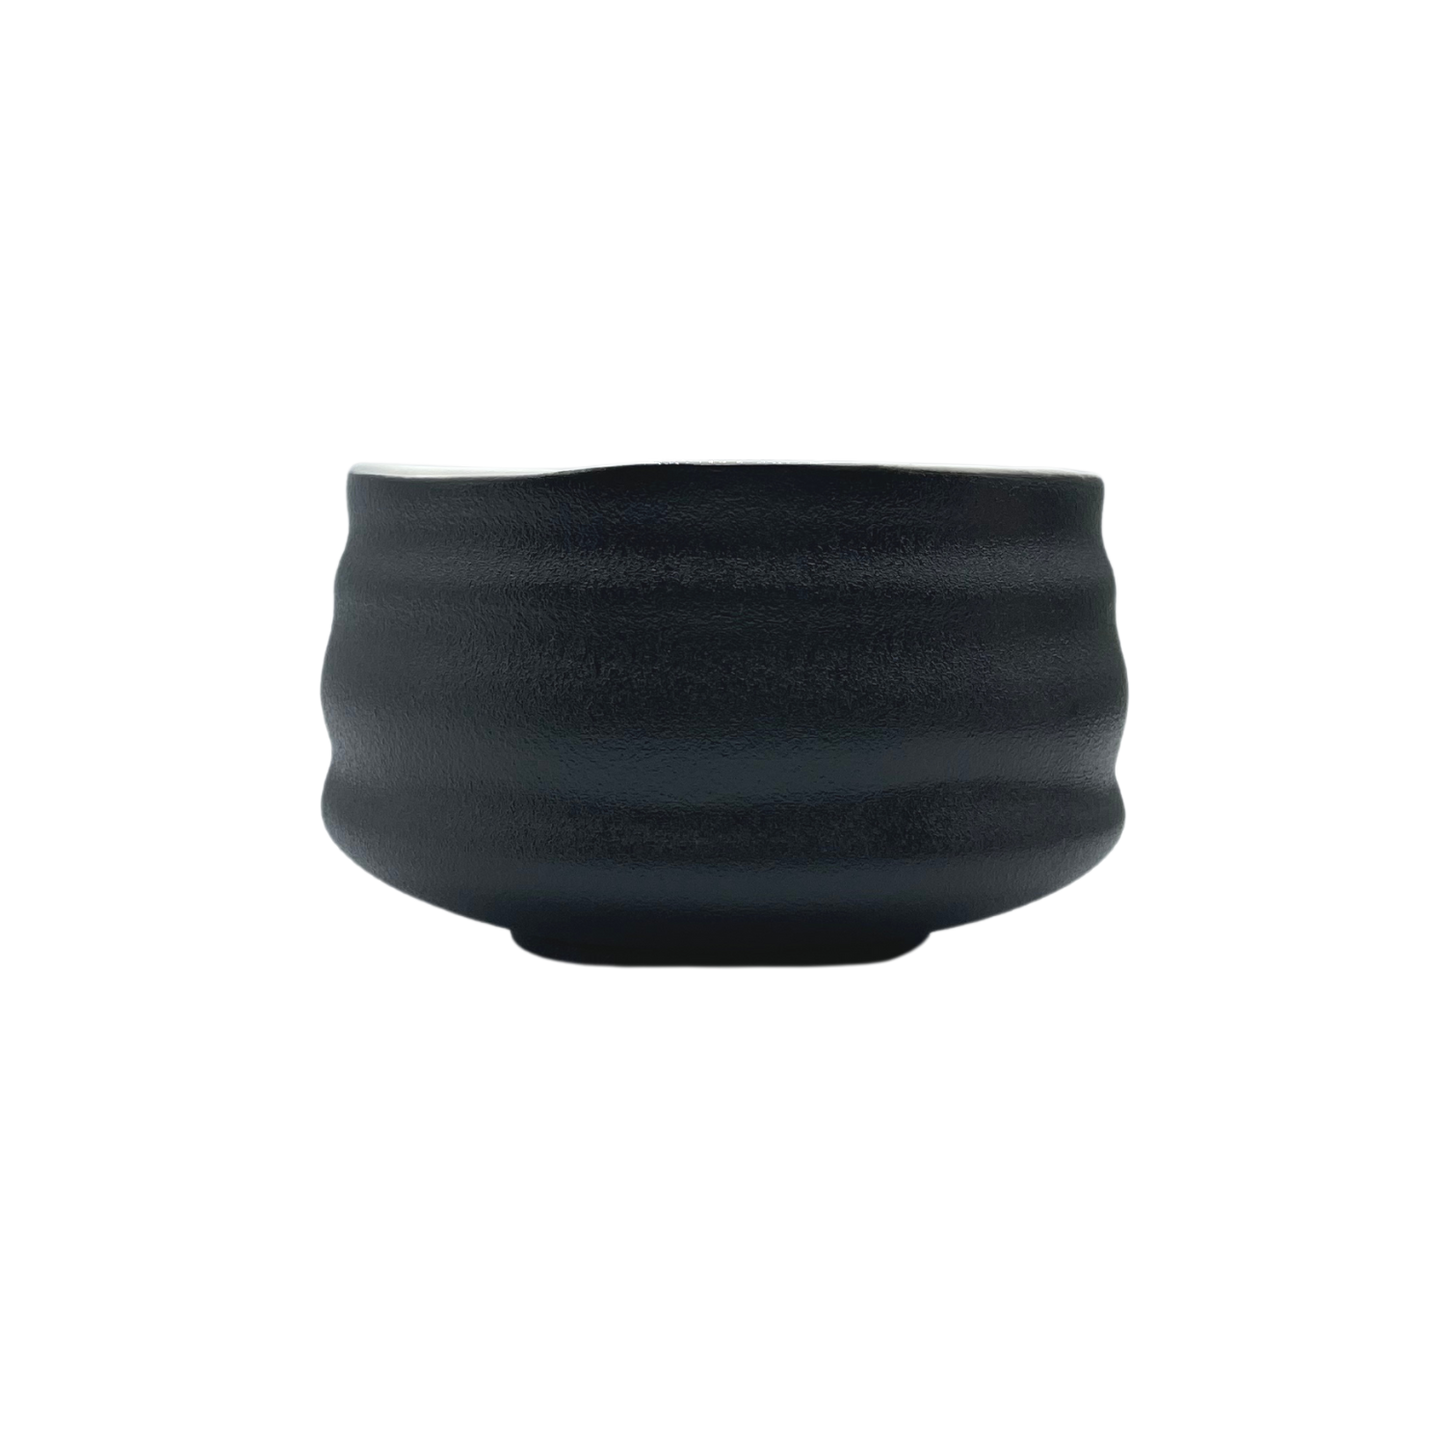 Matcha bowl black & white